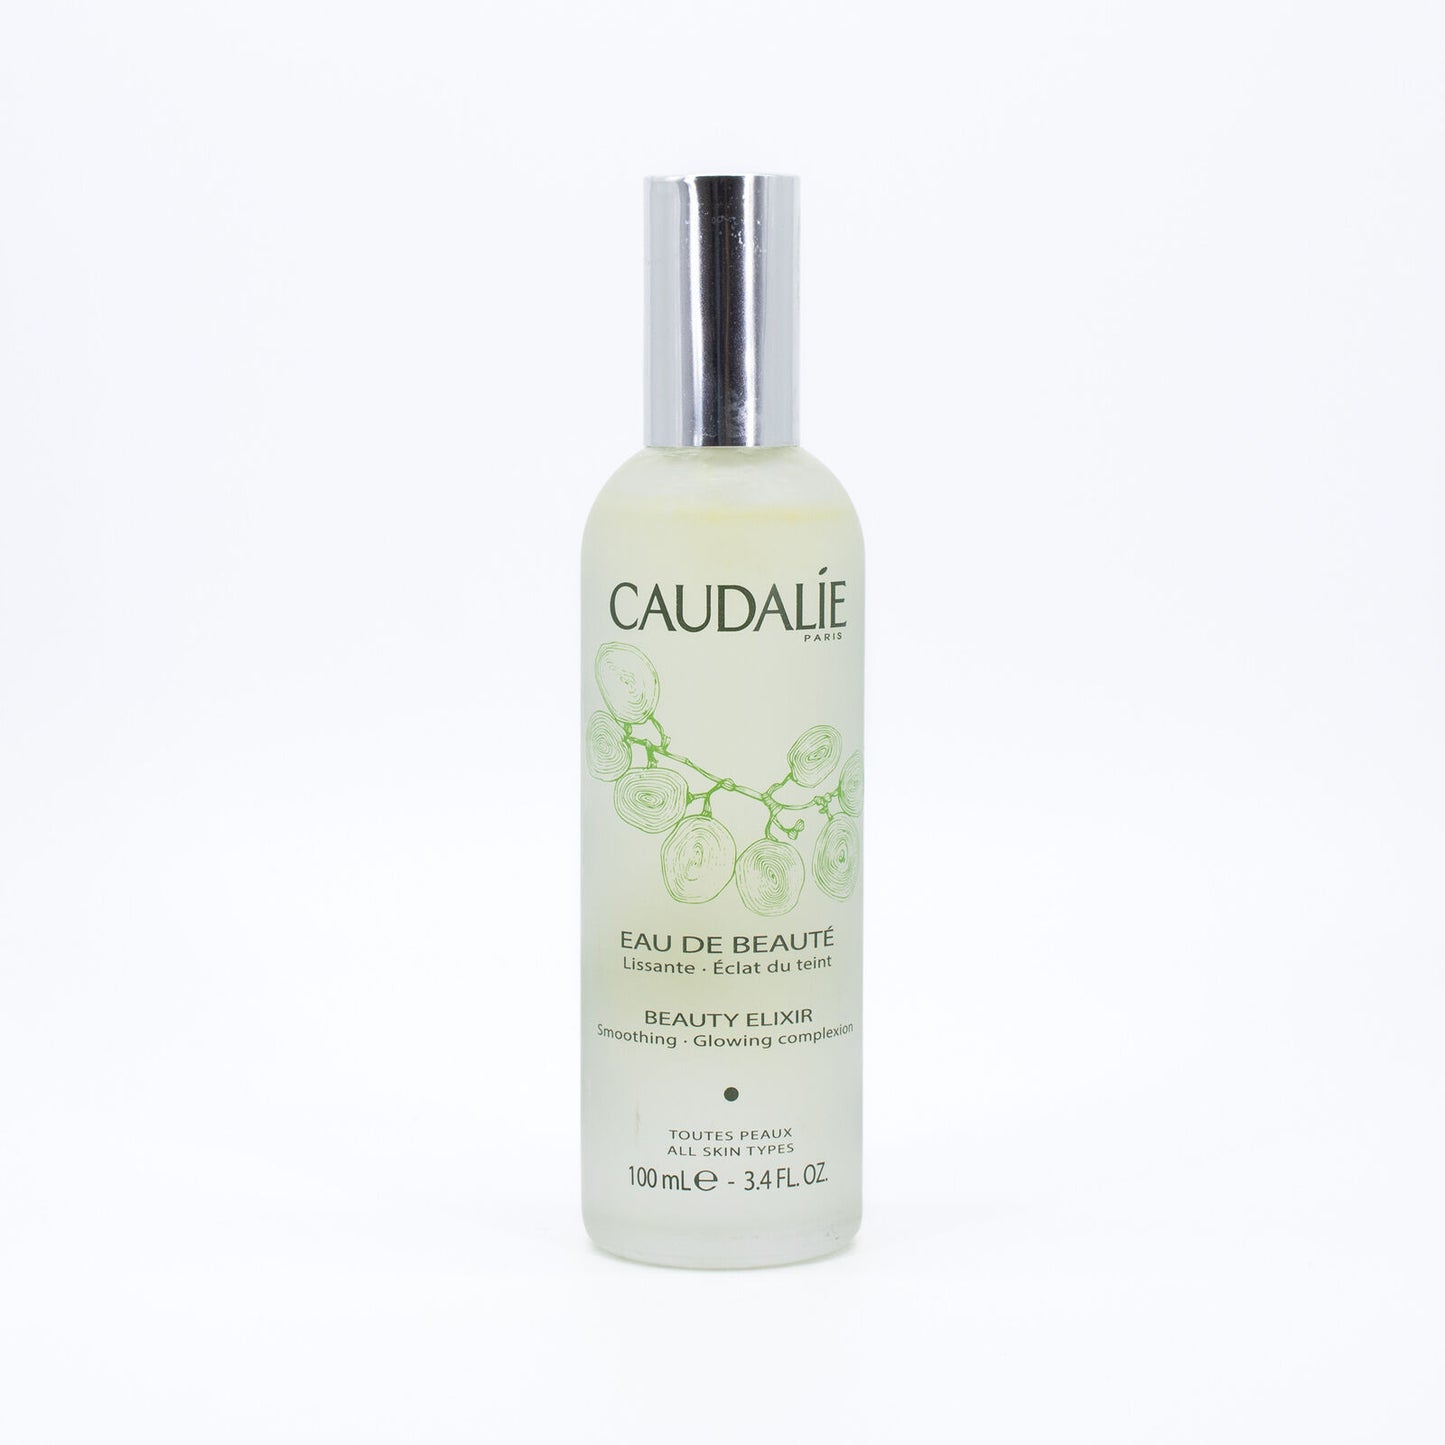 CAUDALIE Beauty Elixir Face Mist 3.4oz - Small Amount Missing